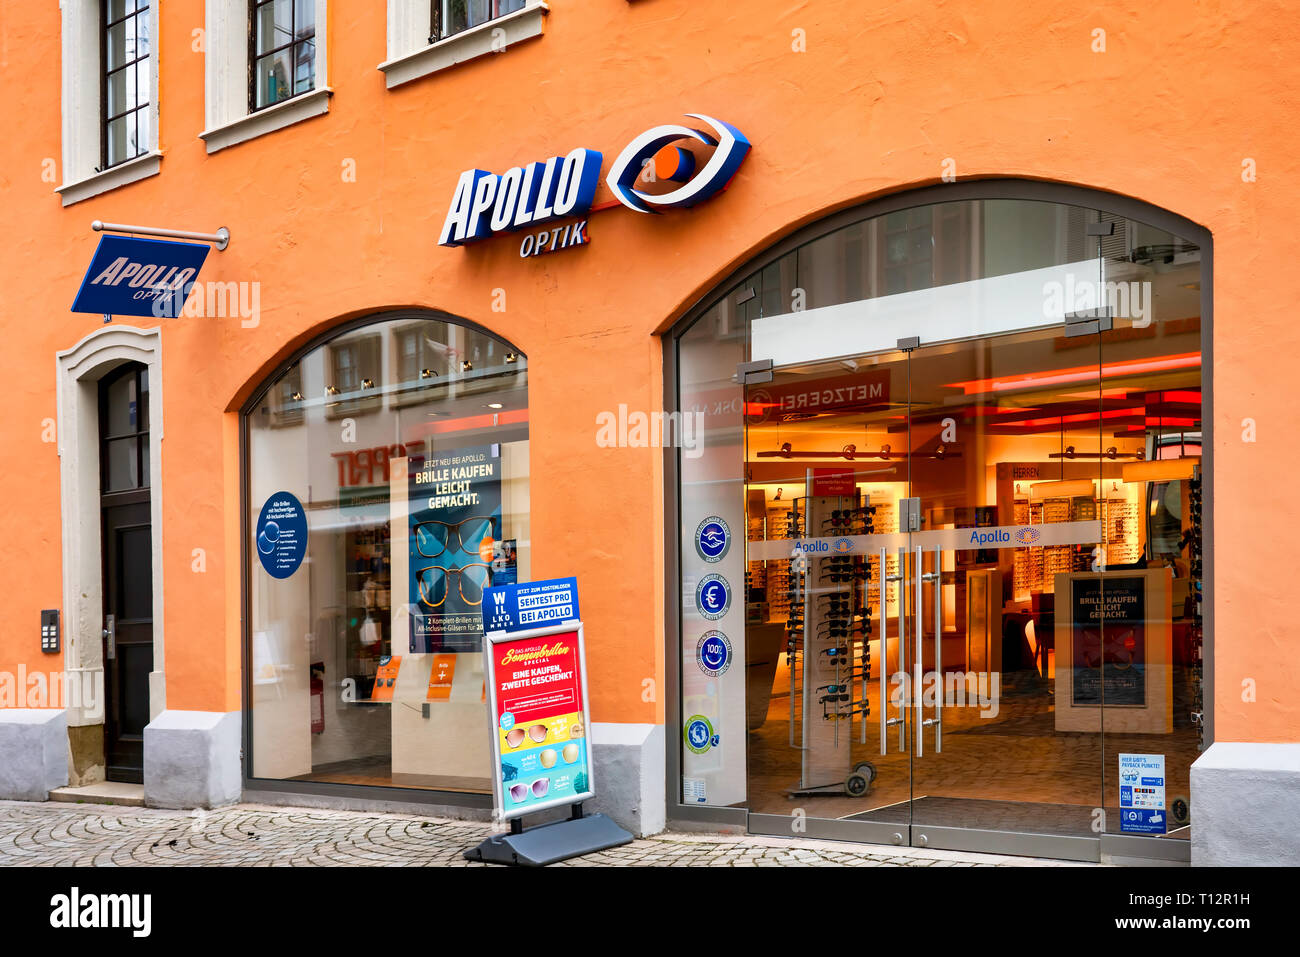 Rottenburg, Germany, 16/03/2019:Apollo-Optik Store in the city of Rottenburg. Stock Photo